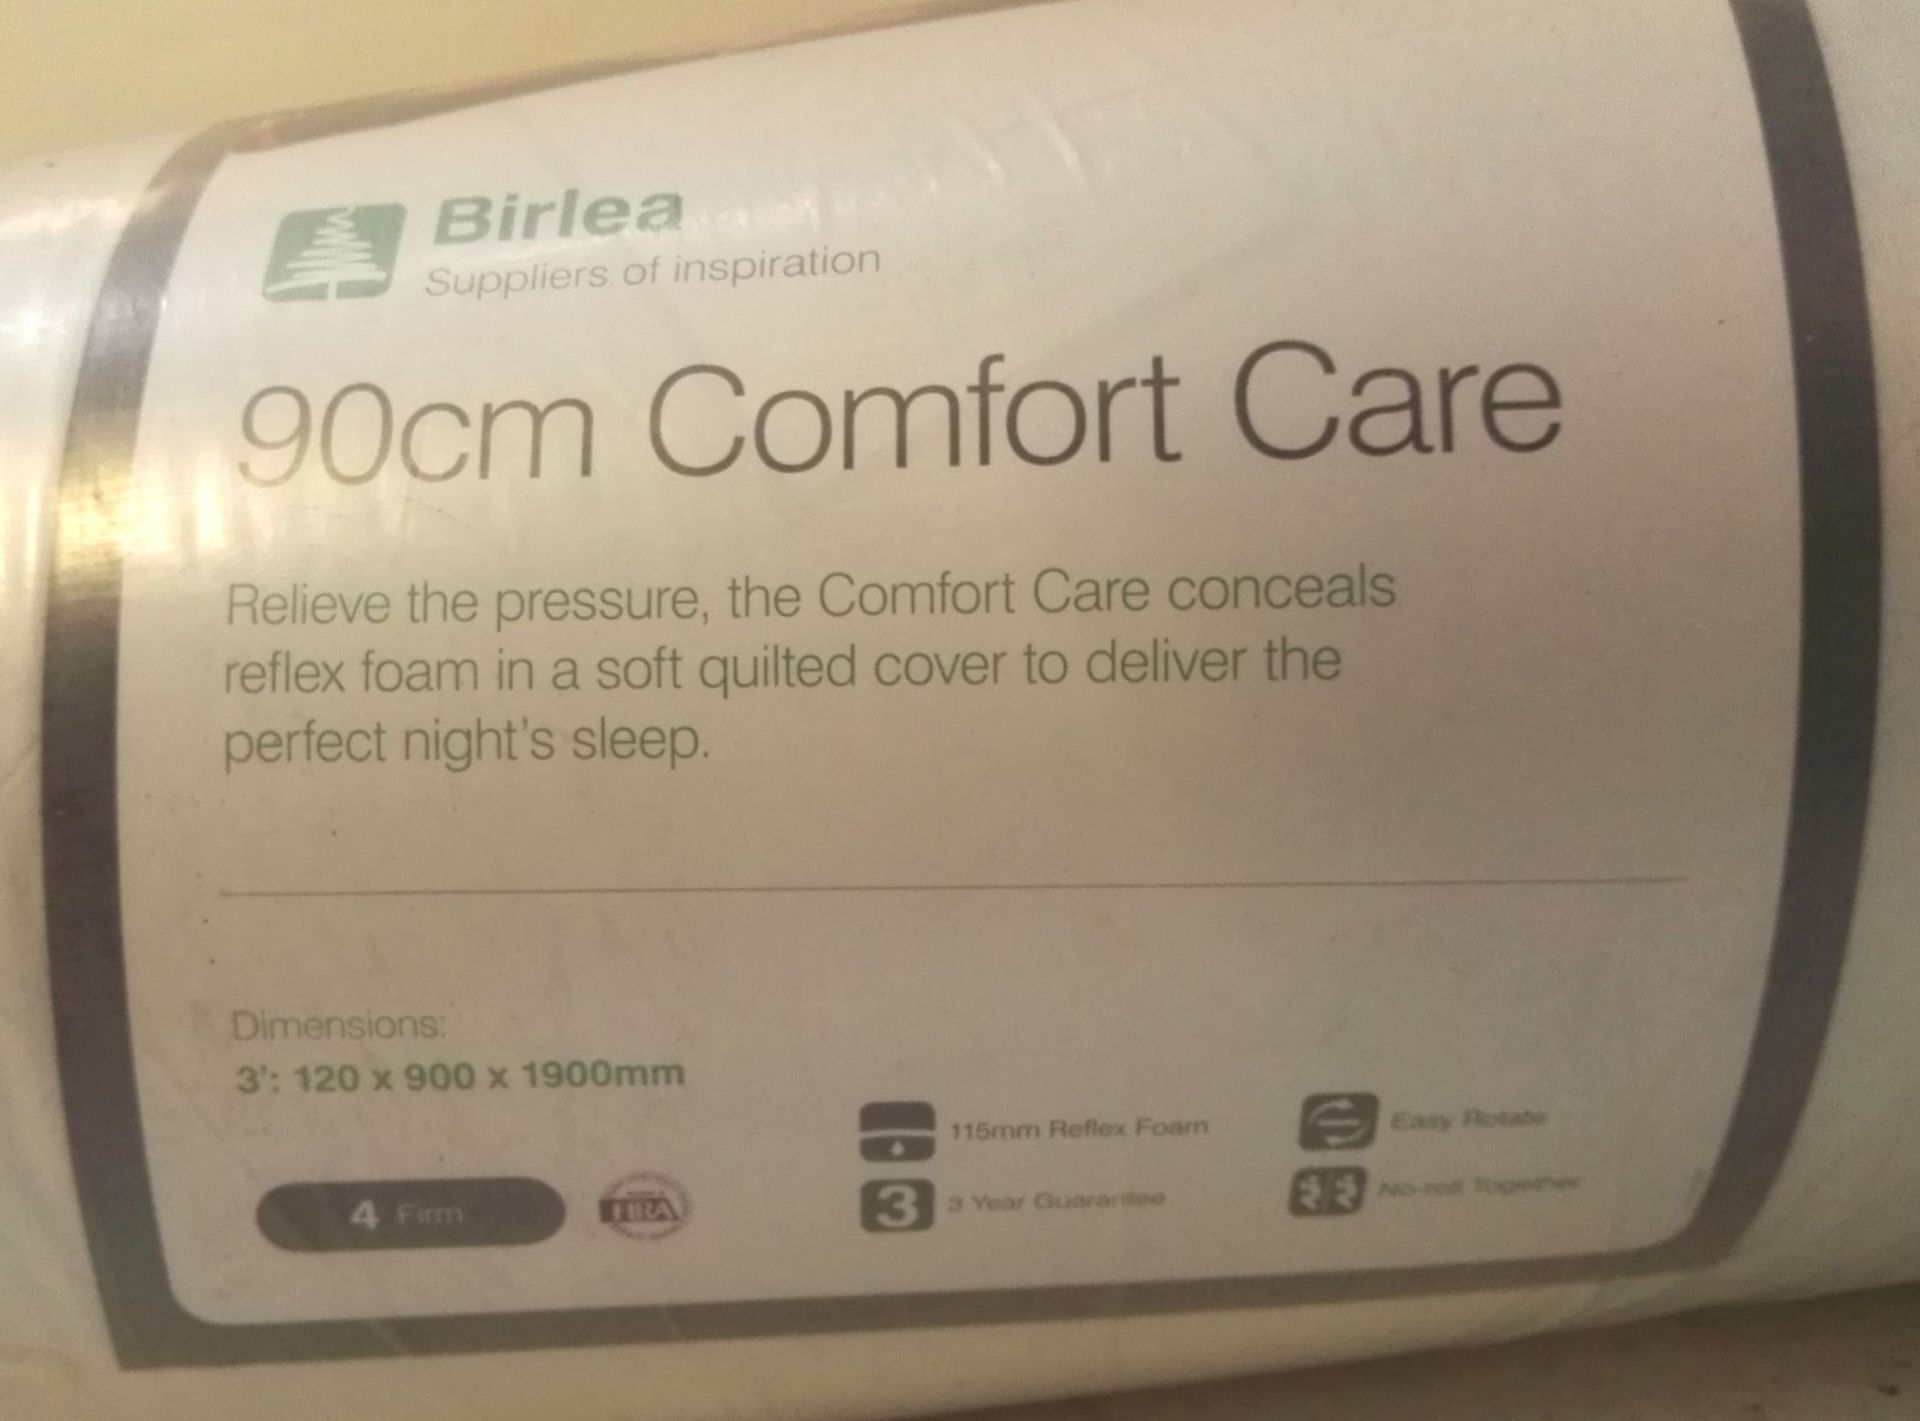 1 x Birlea 90cm Comfort Care Firm Rolled Up Reflex Foam Mattress - Brand New Stock - CL286 - - Image 3 of 5